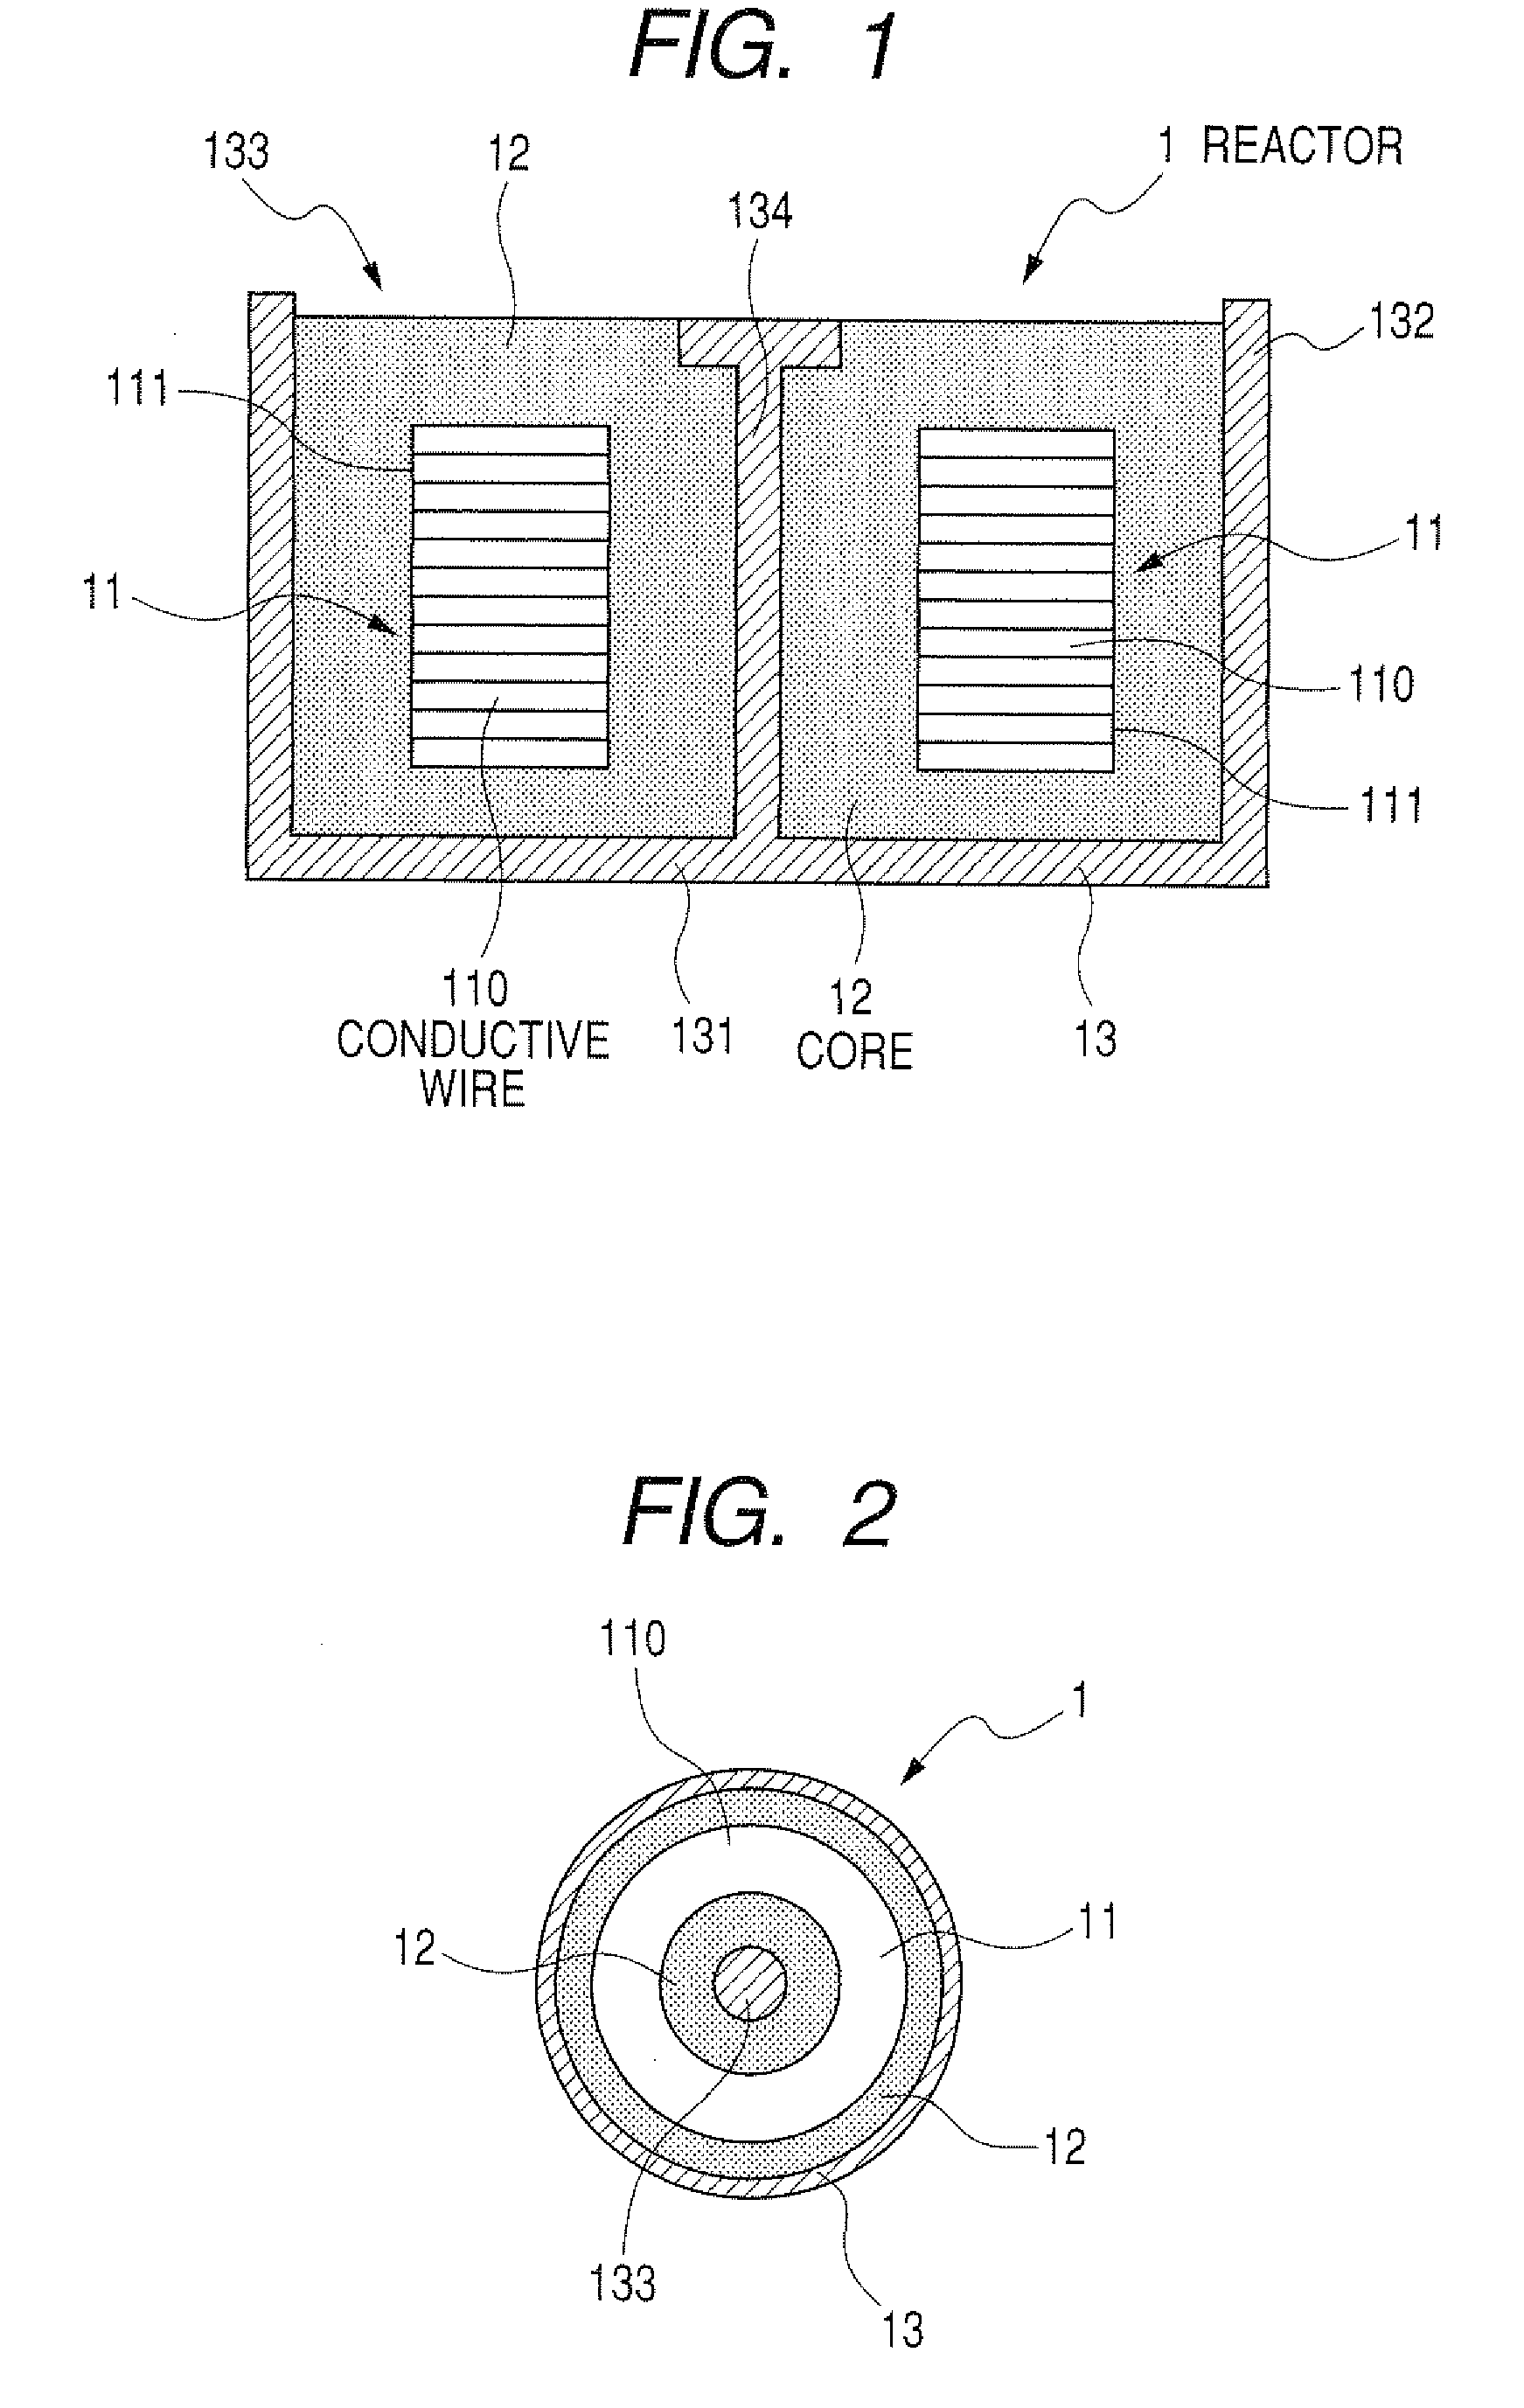 Method of fabricating reactor